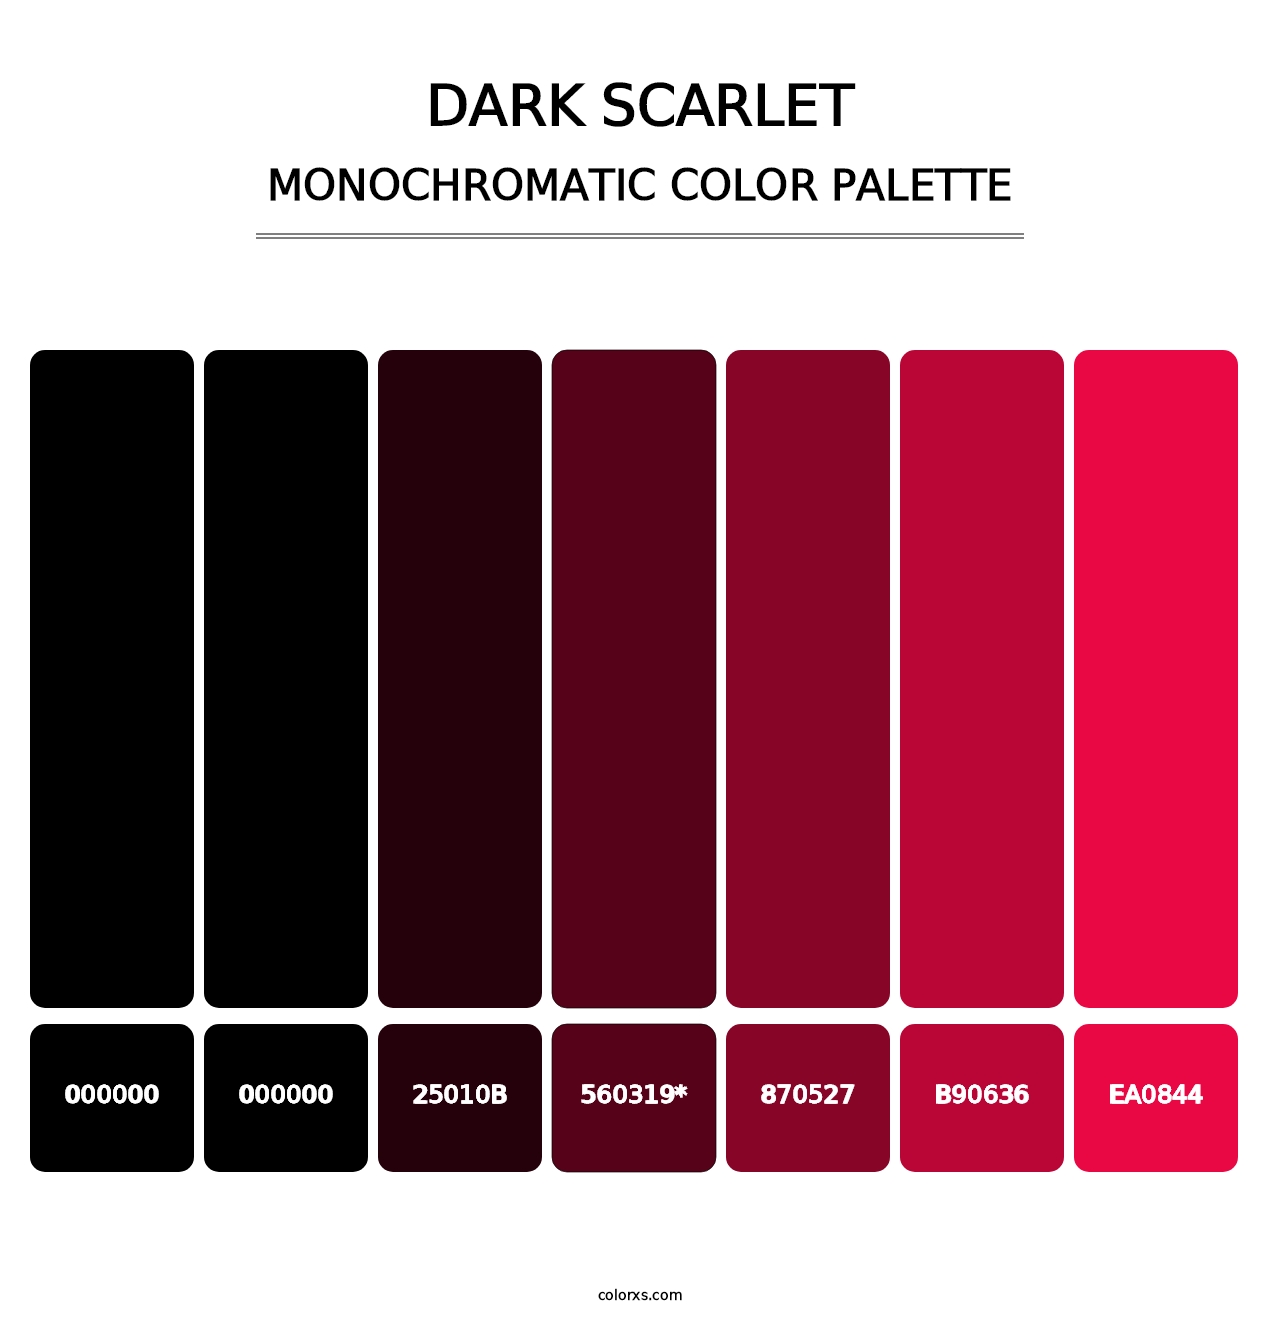 Dark Scarlet - Monochromatic Color Palette